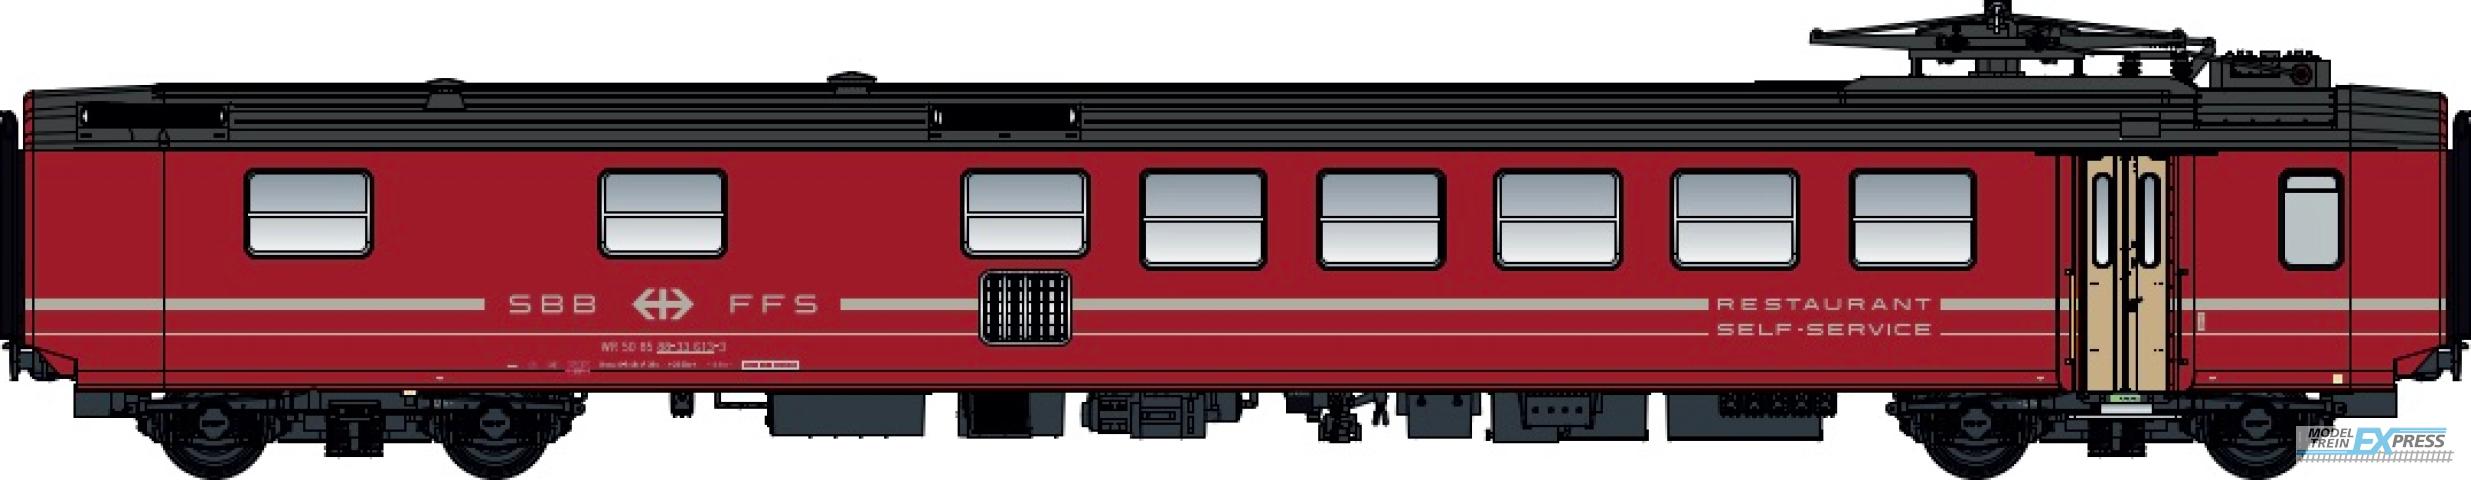 LS Models 47262AC EW I, rood, grijs dak, witte lijn, CFF-SBB logo, Restaurant Self-Service opschrift  /  Ep. IV  /  SBB  /  HO  /  AC  /  1 P.